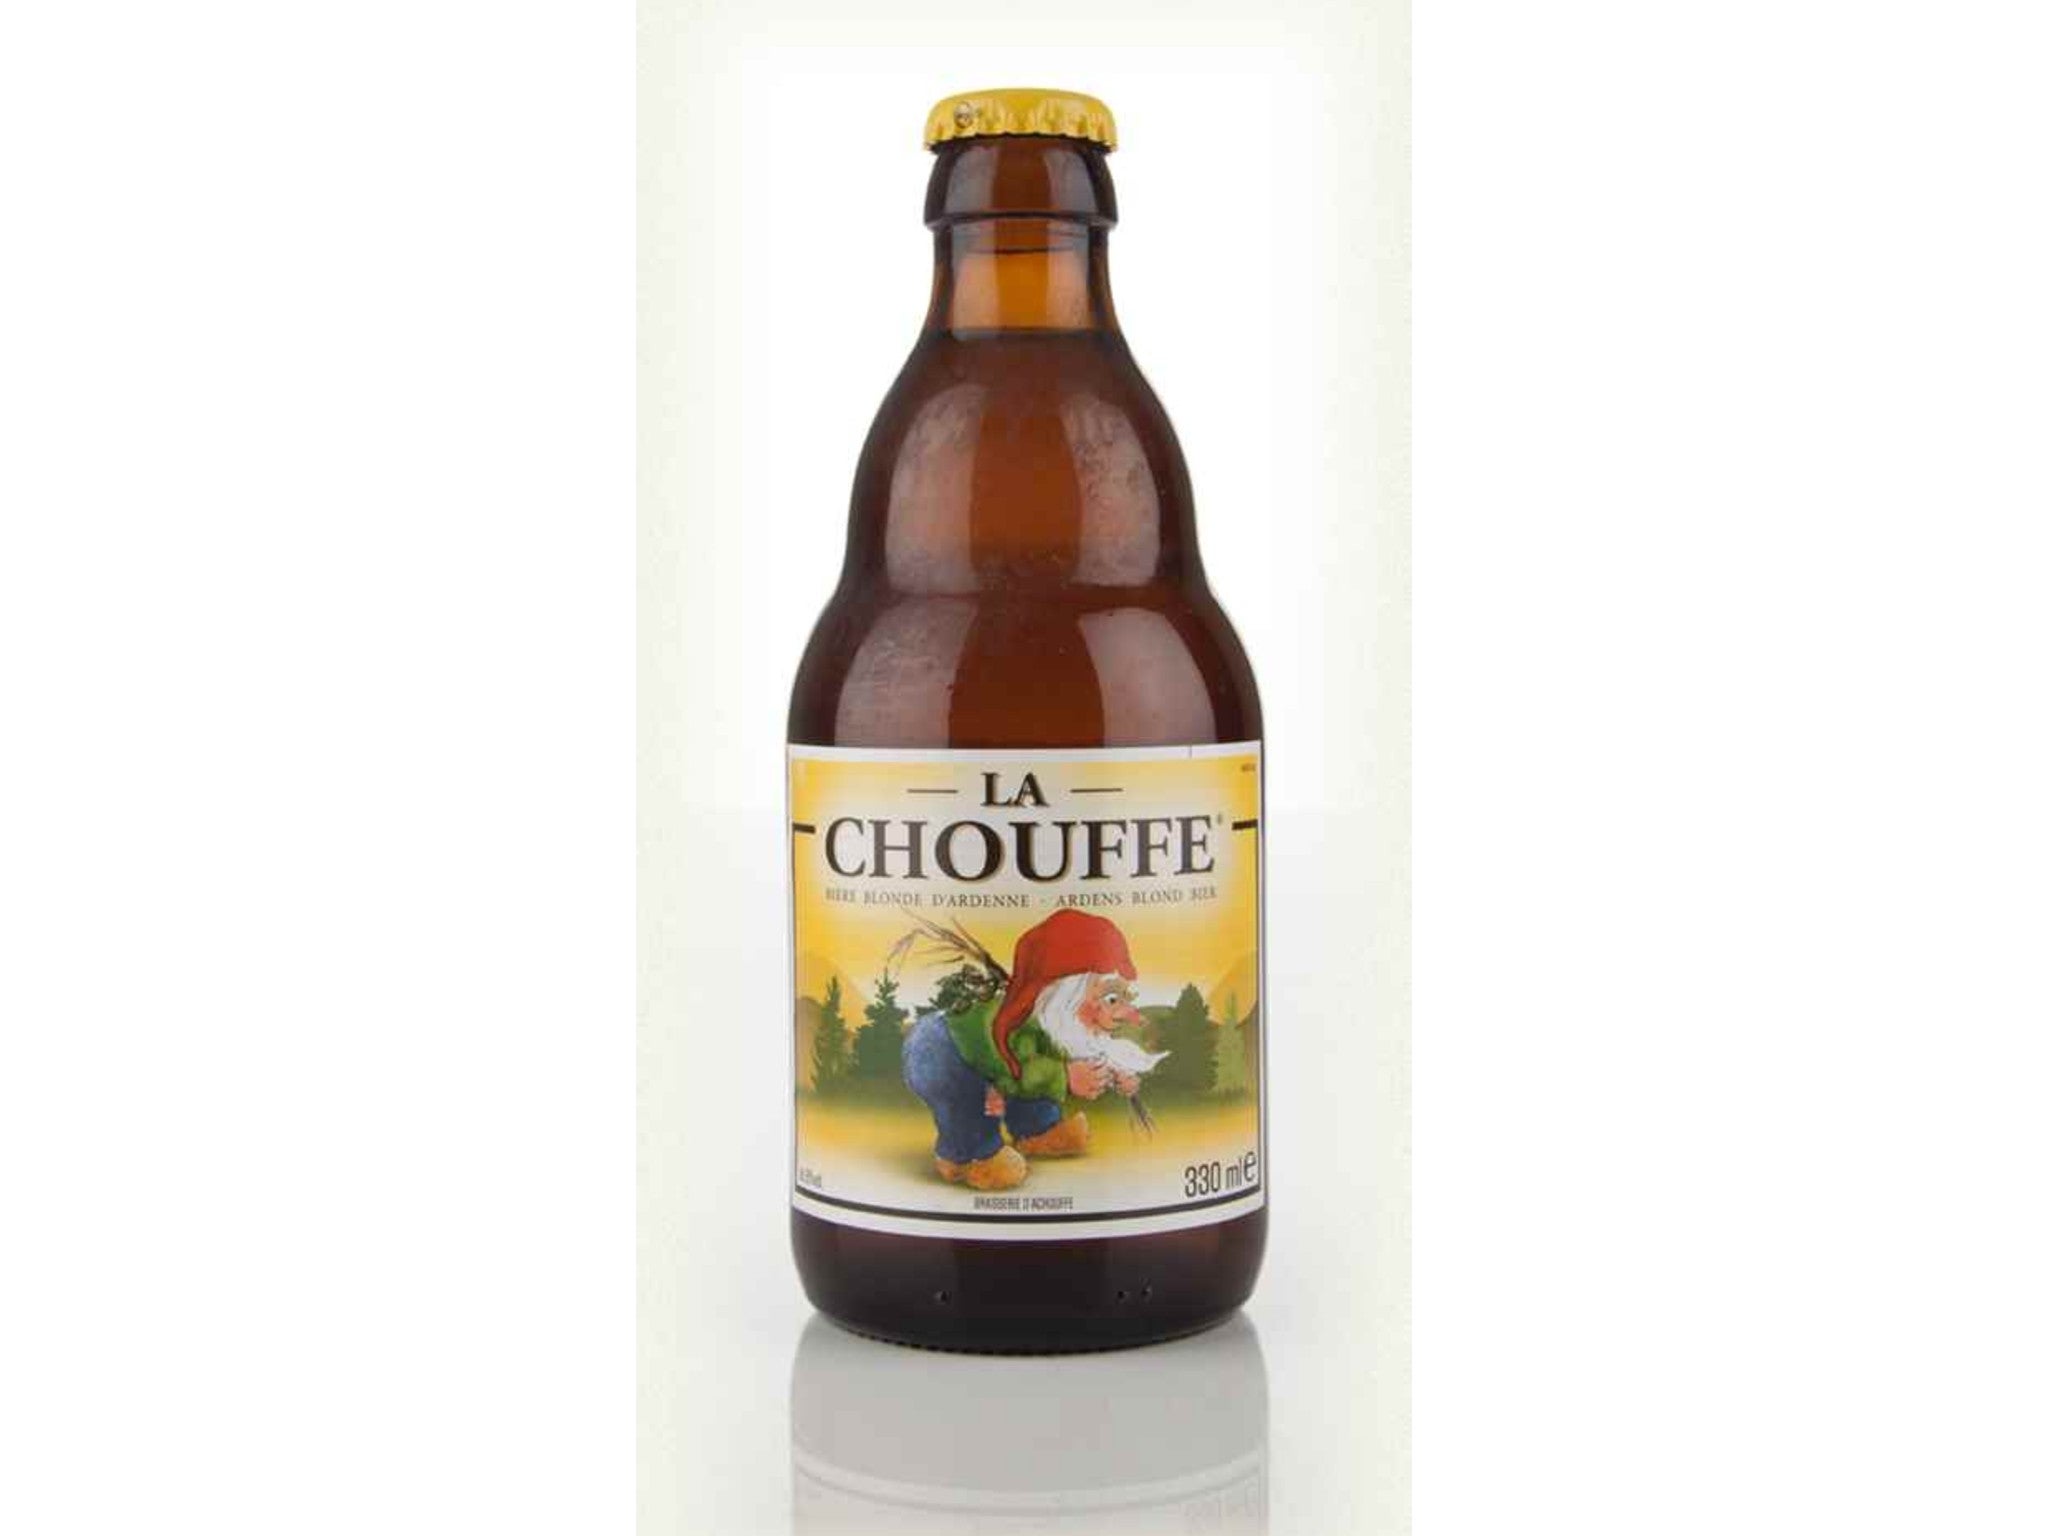 La Chouffe blond ale, 8%, 330ml indybest.jpg